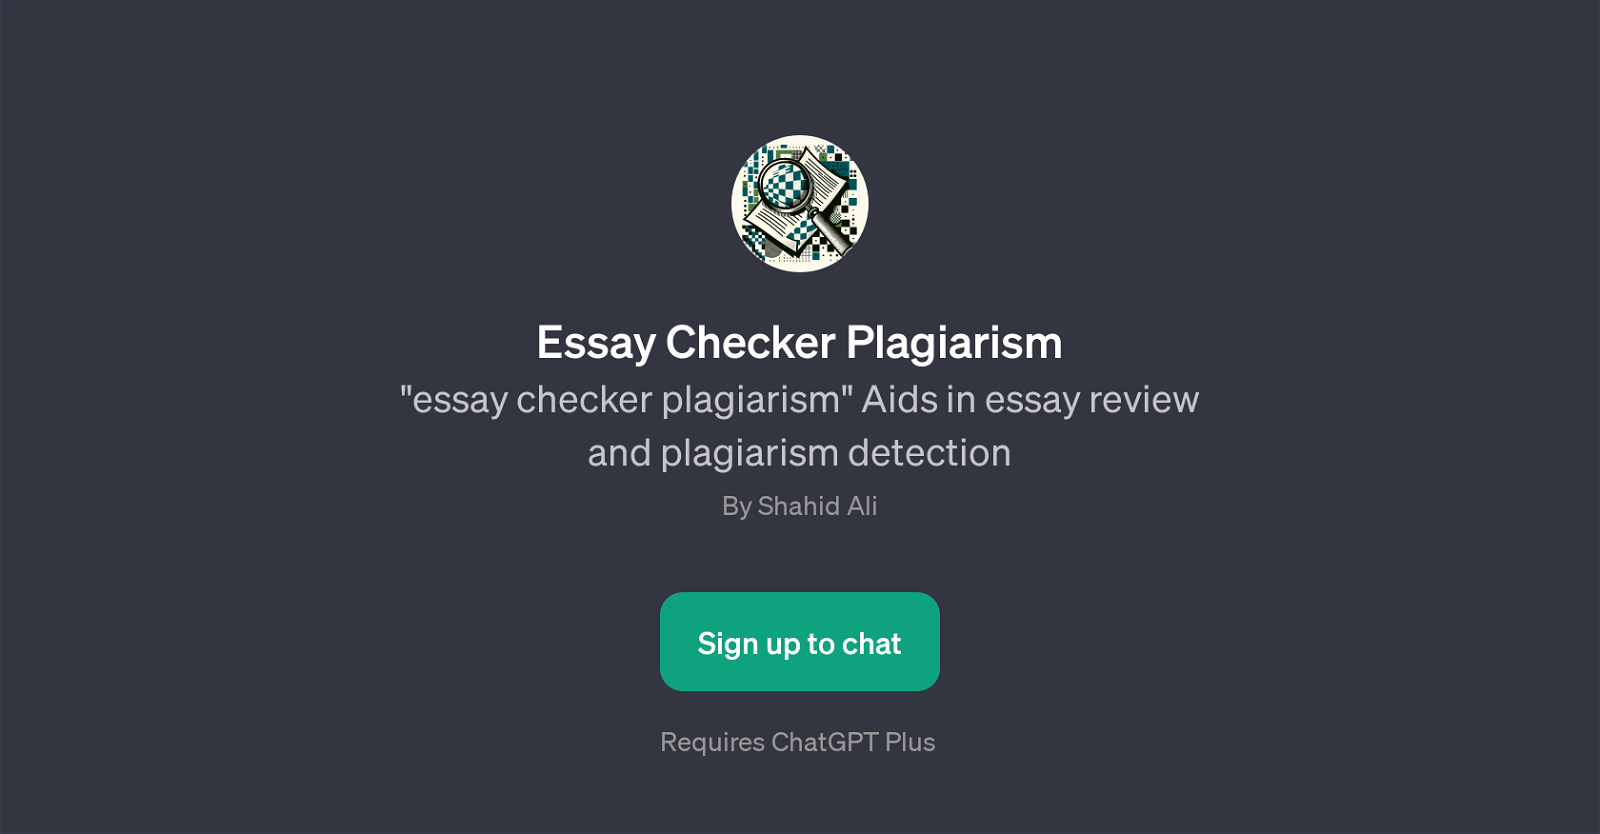 Essay Checker Plagiarism website